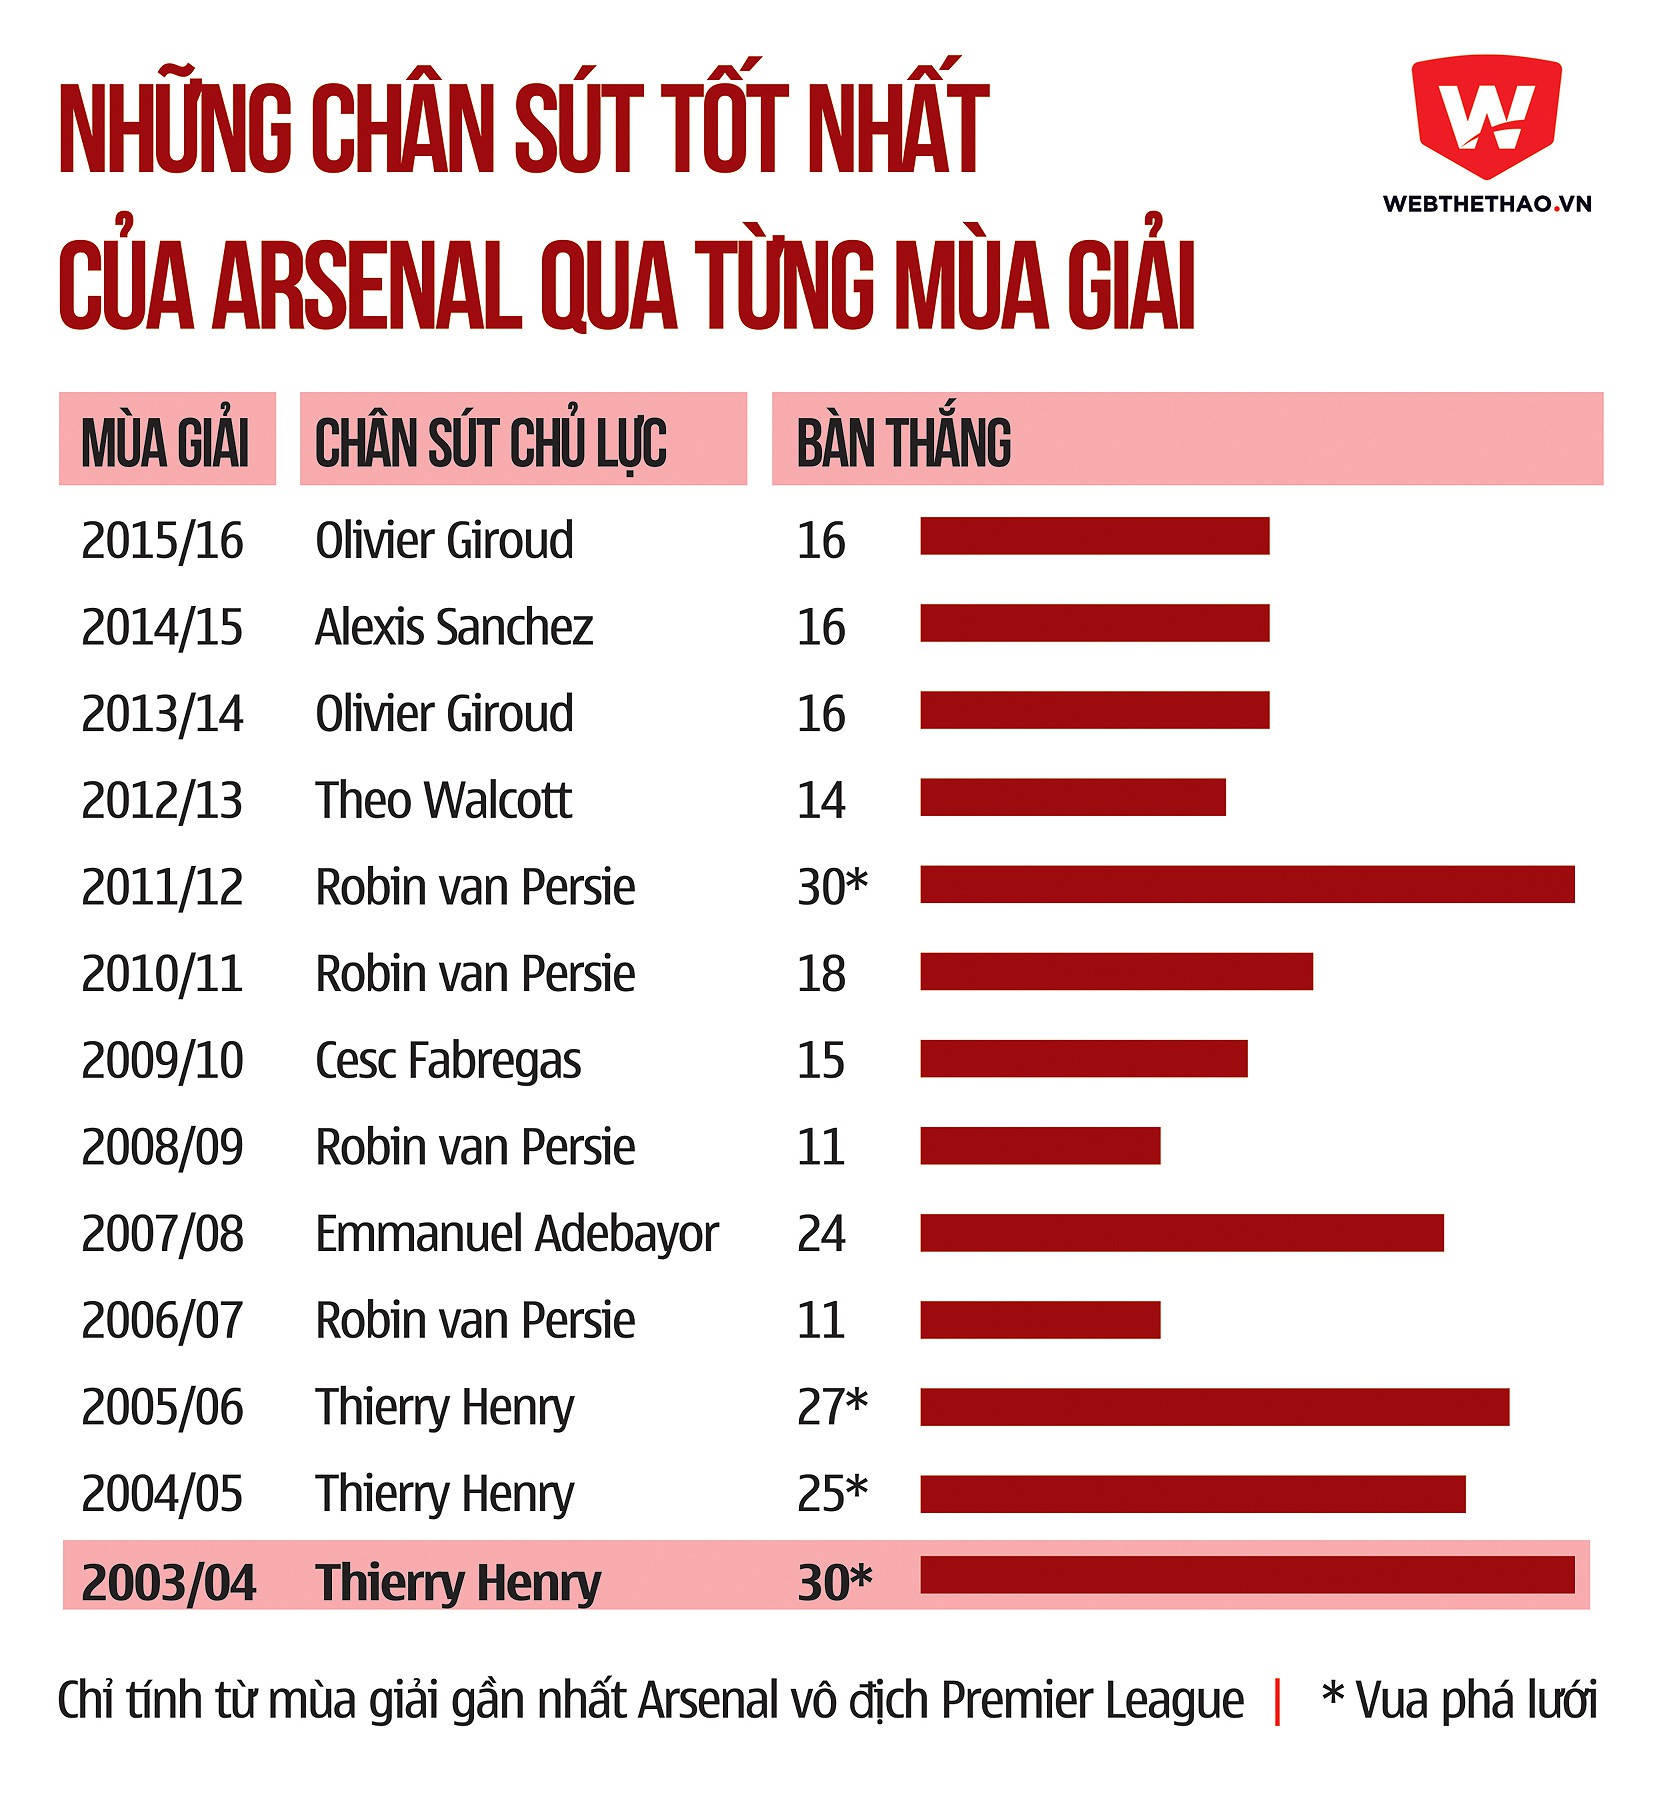 Alexis Sanchez phải ghi bao nhiêu bàn để giúp Arsenal vô địch Premier League?